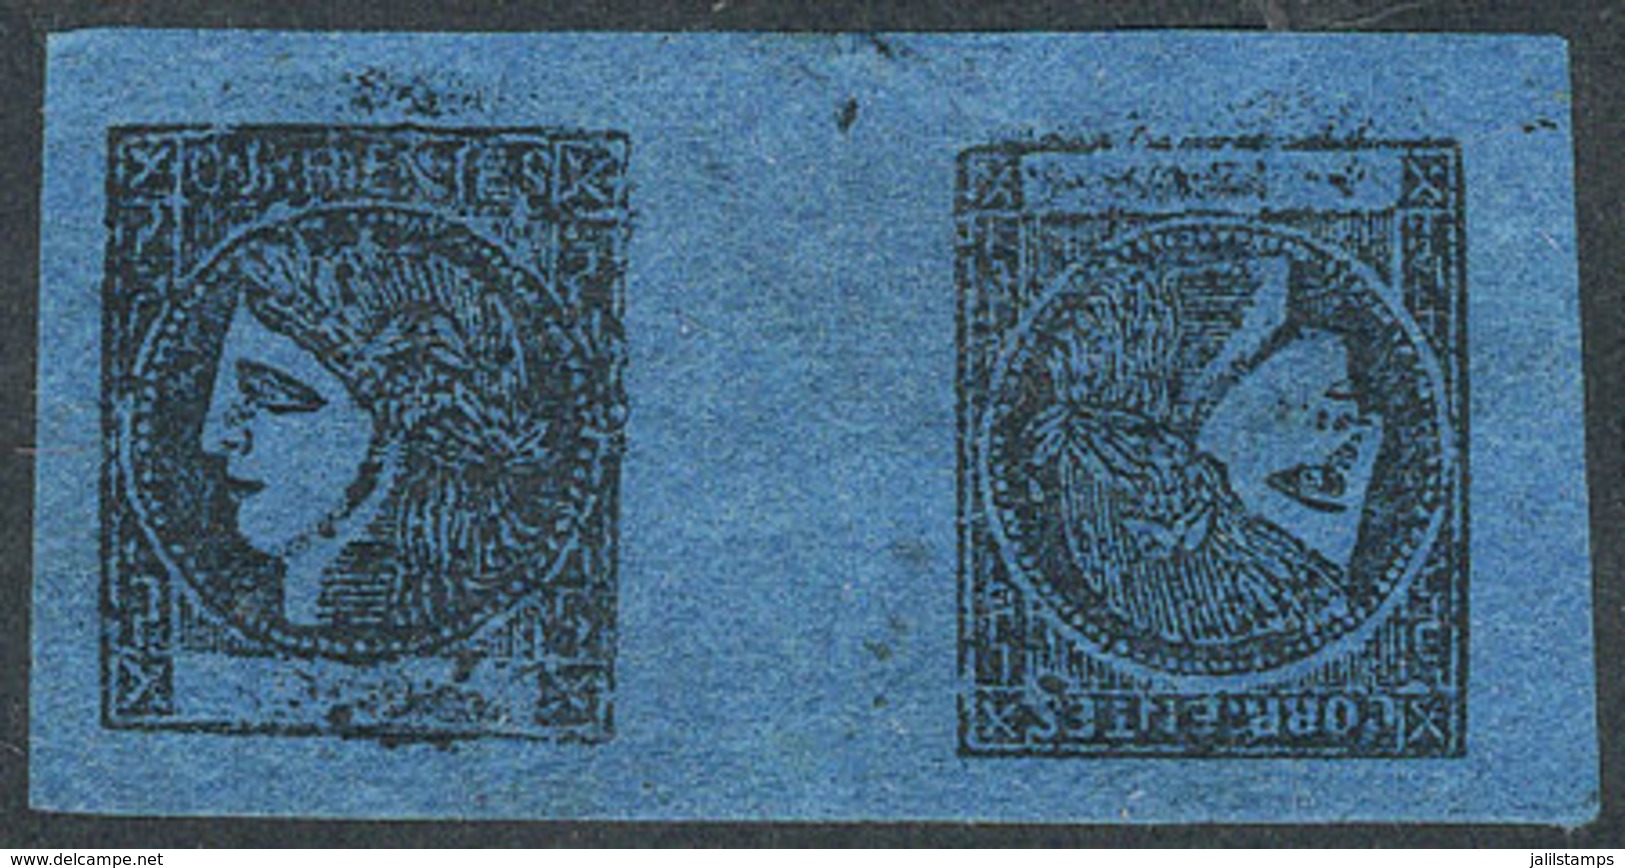 216 ARGENTINA: GJ.7T, Dark Blue, TETE-BECHE Pair, Mint With Original Gum (+50%), Excellent Quality! - Corrientes (1856-1880)